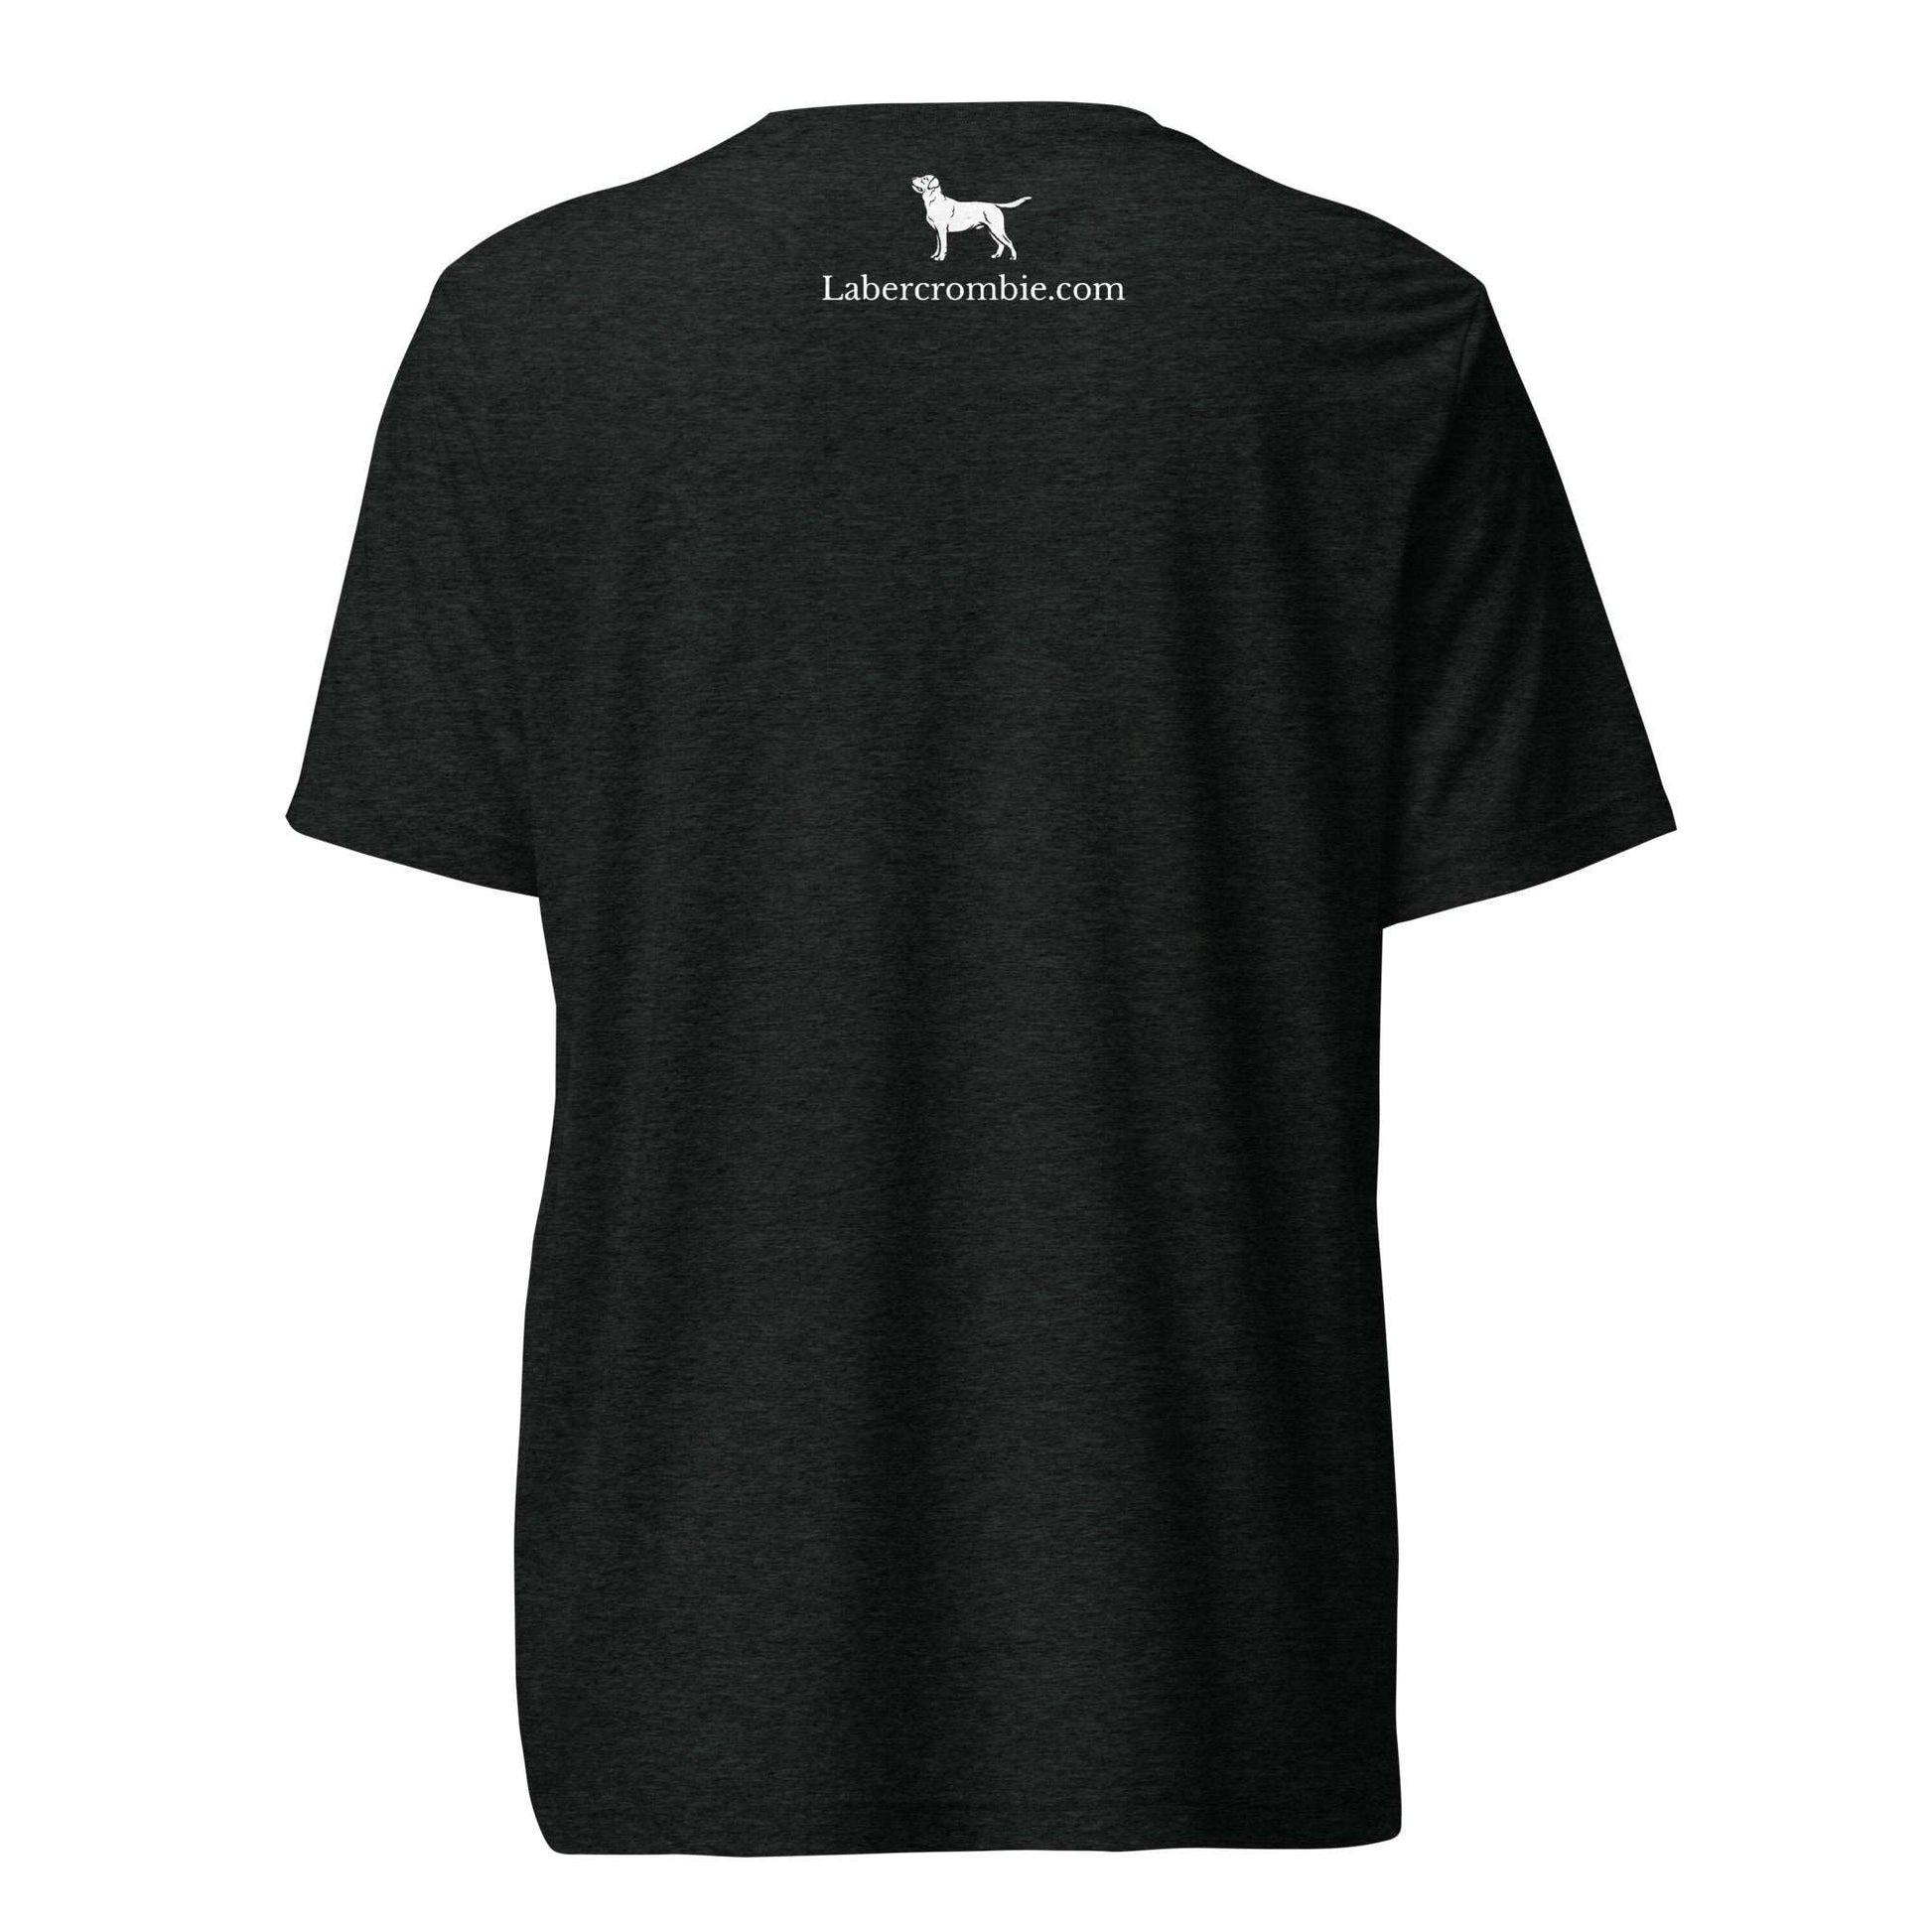 Dog Beers Short sleeve t-shirt